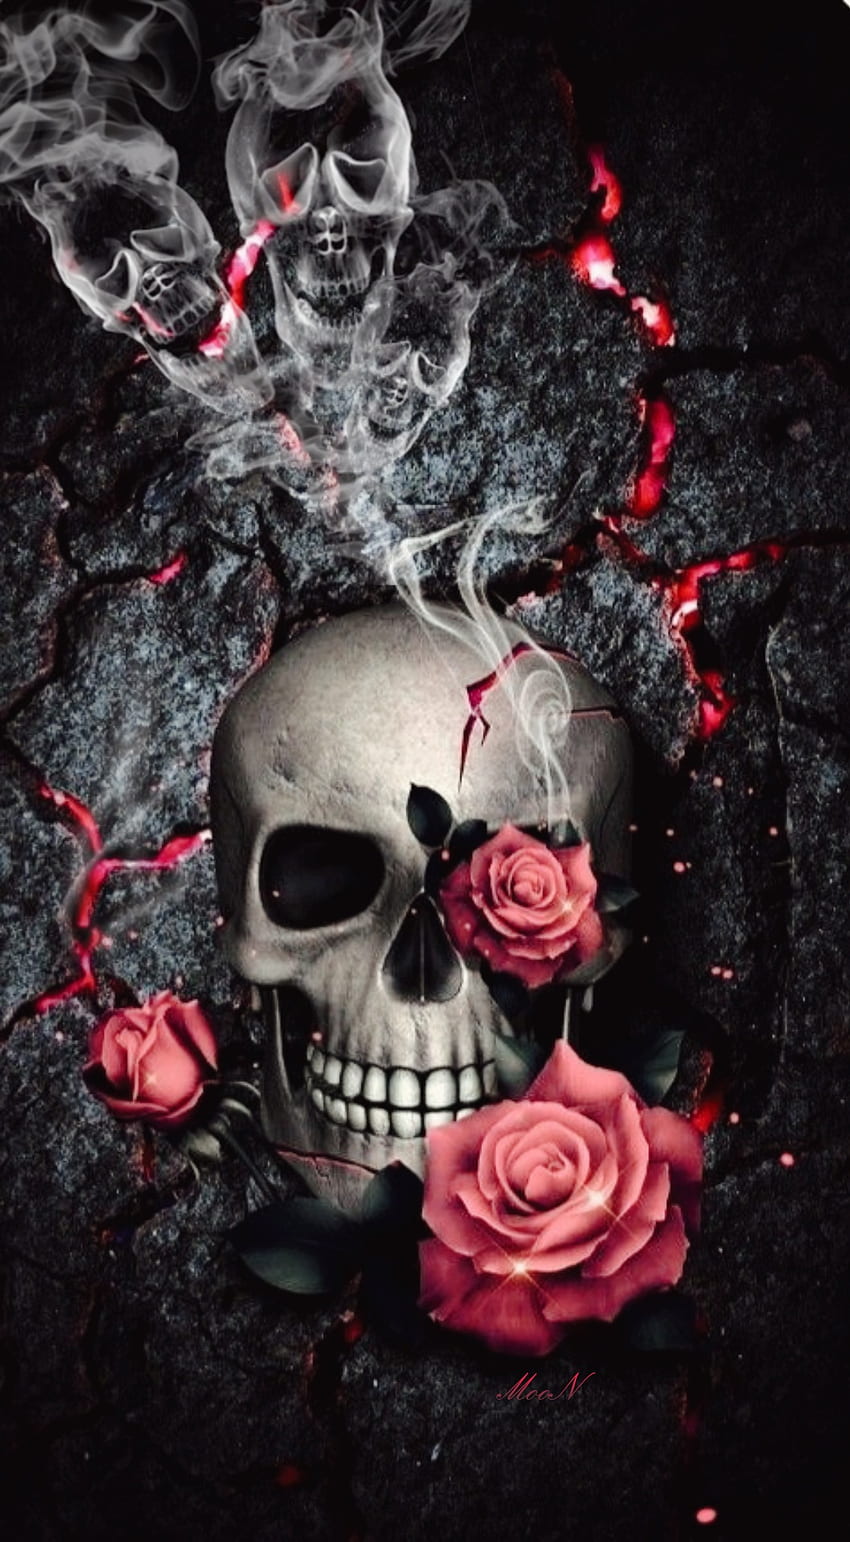 Rose Skulls IPhone Wallpaper  IPhone Wallpapers  iPhone Wallpapers   Cráneos y rosas Cráneos y calaveras Arte con calaveras mexicanas